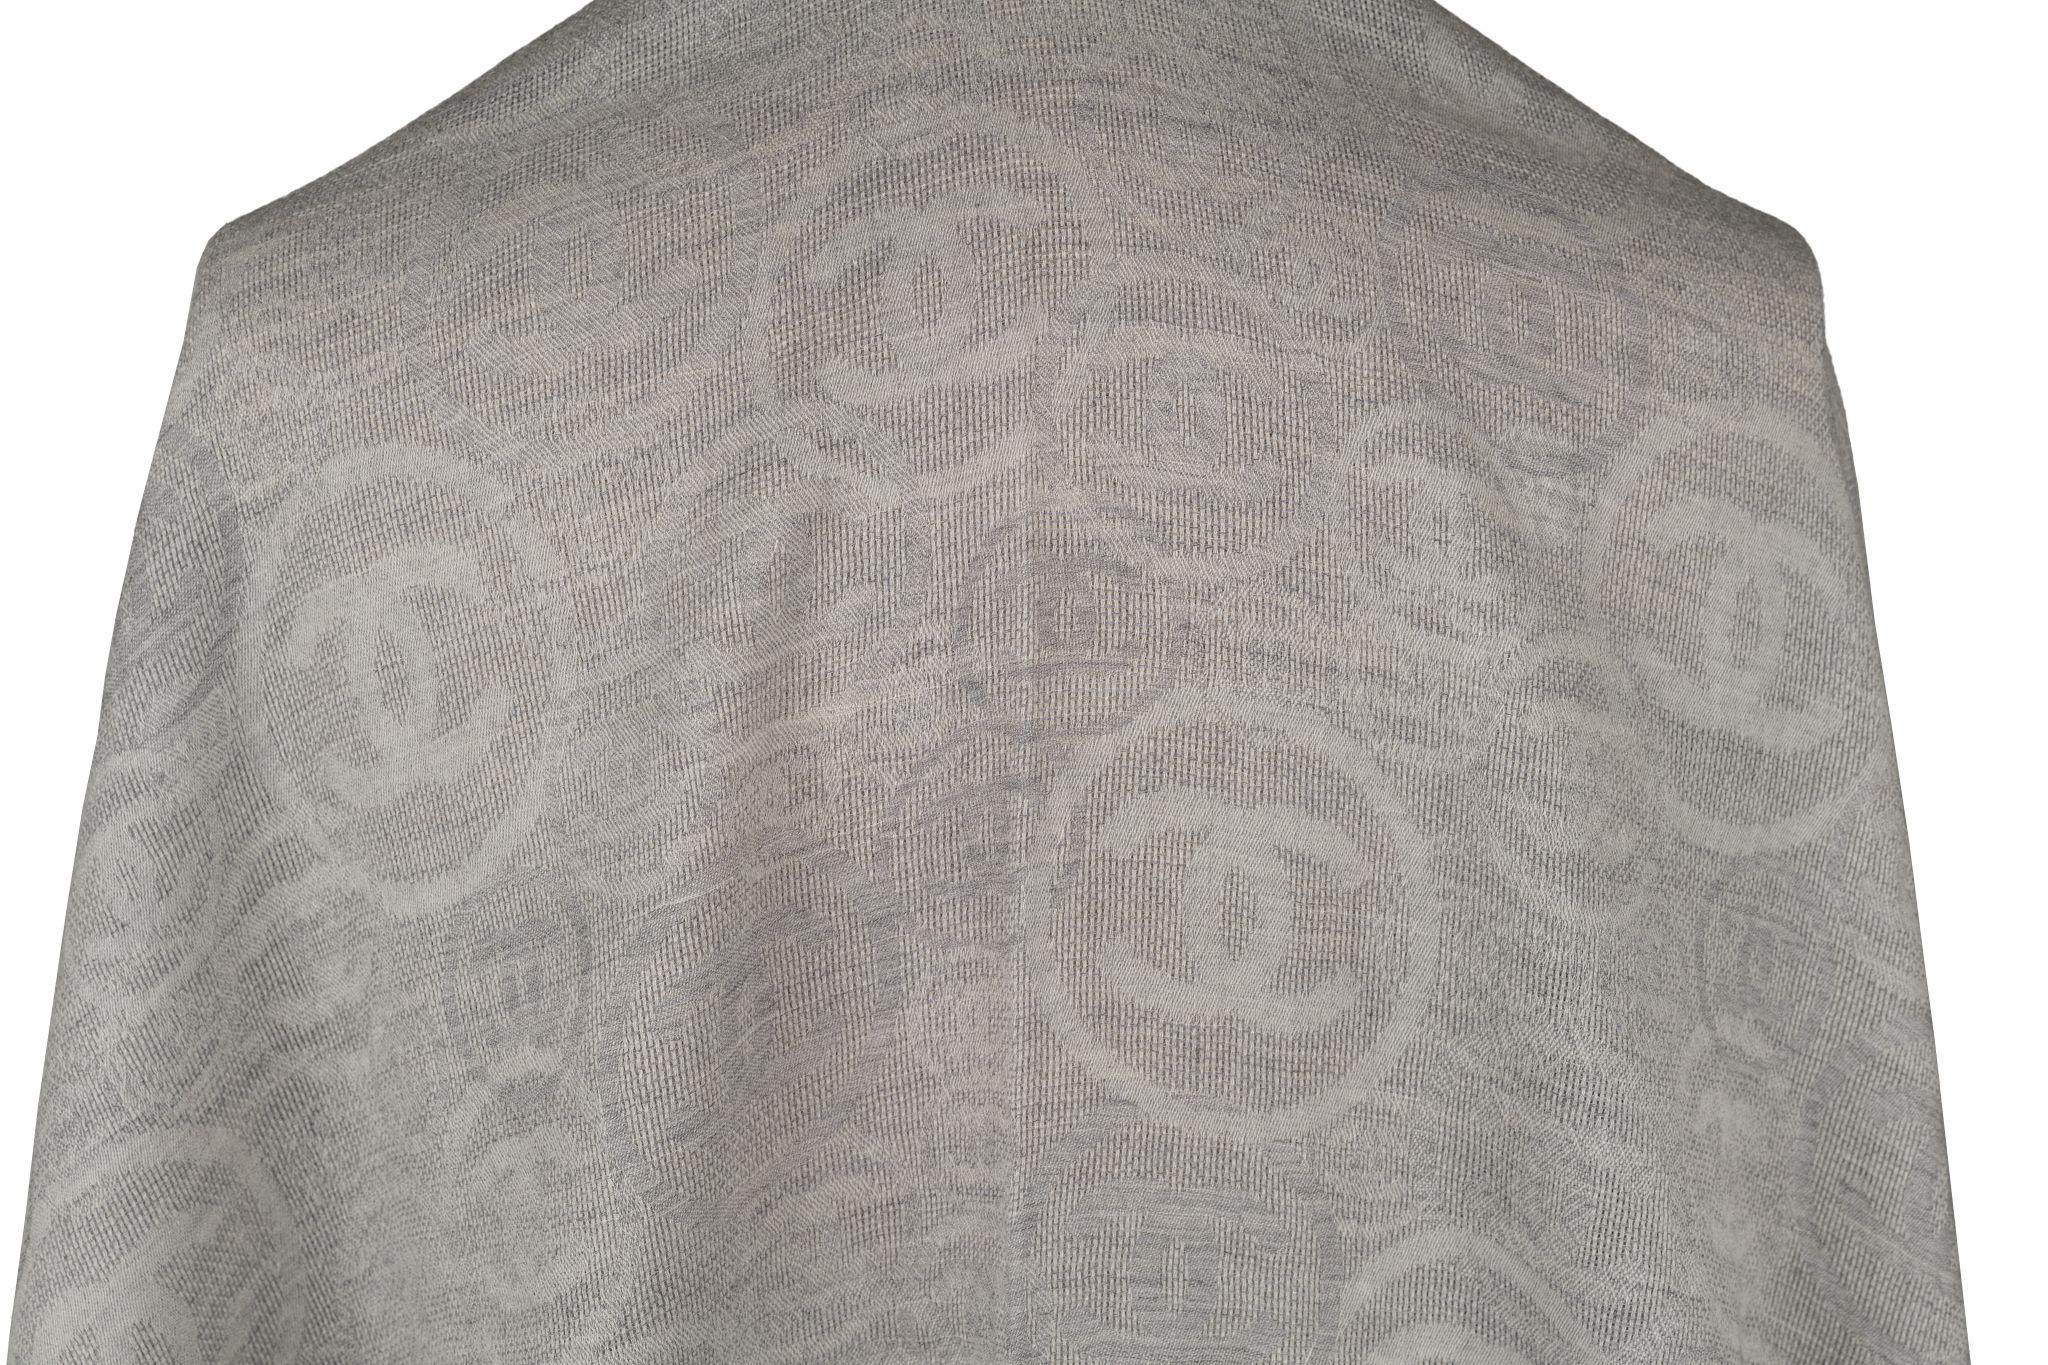 Chanel new square grey large shawl with logo design. 100% cashmere. Fringed edges. Classic and stylish.